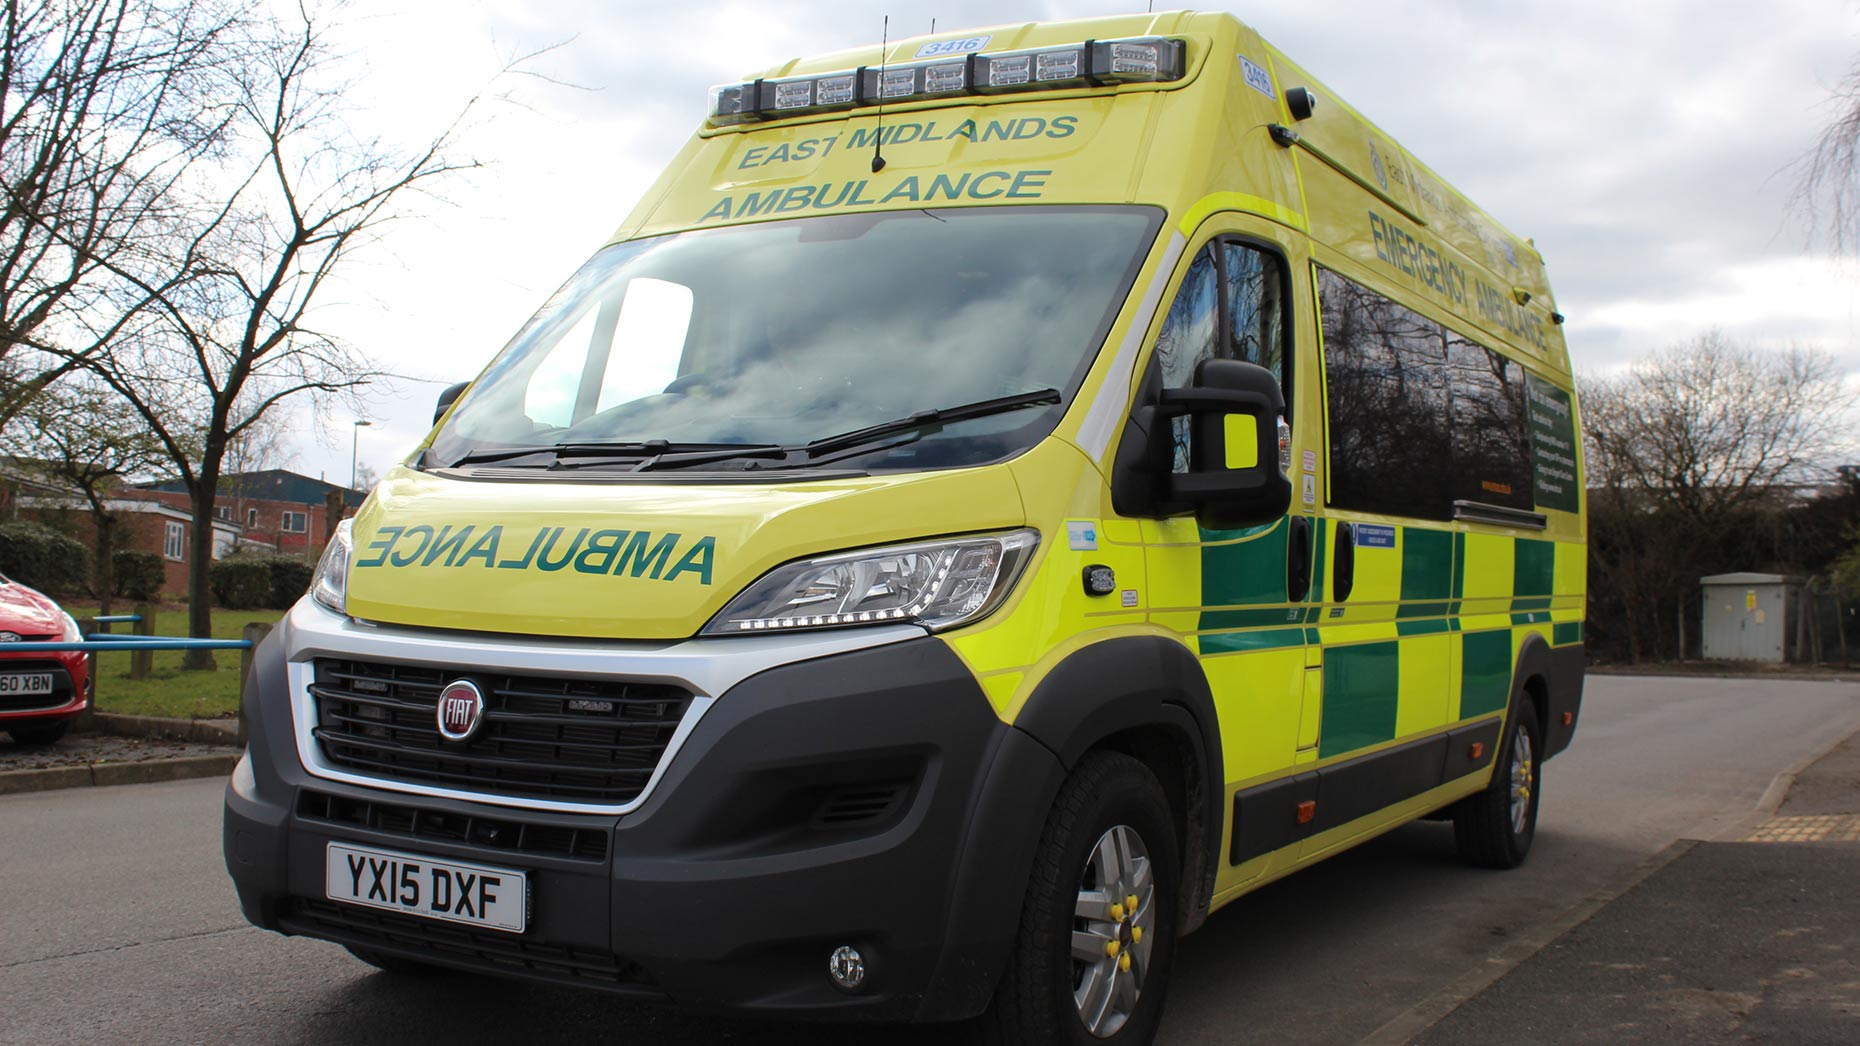 The new ambulances for EMAS